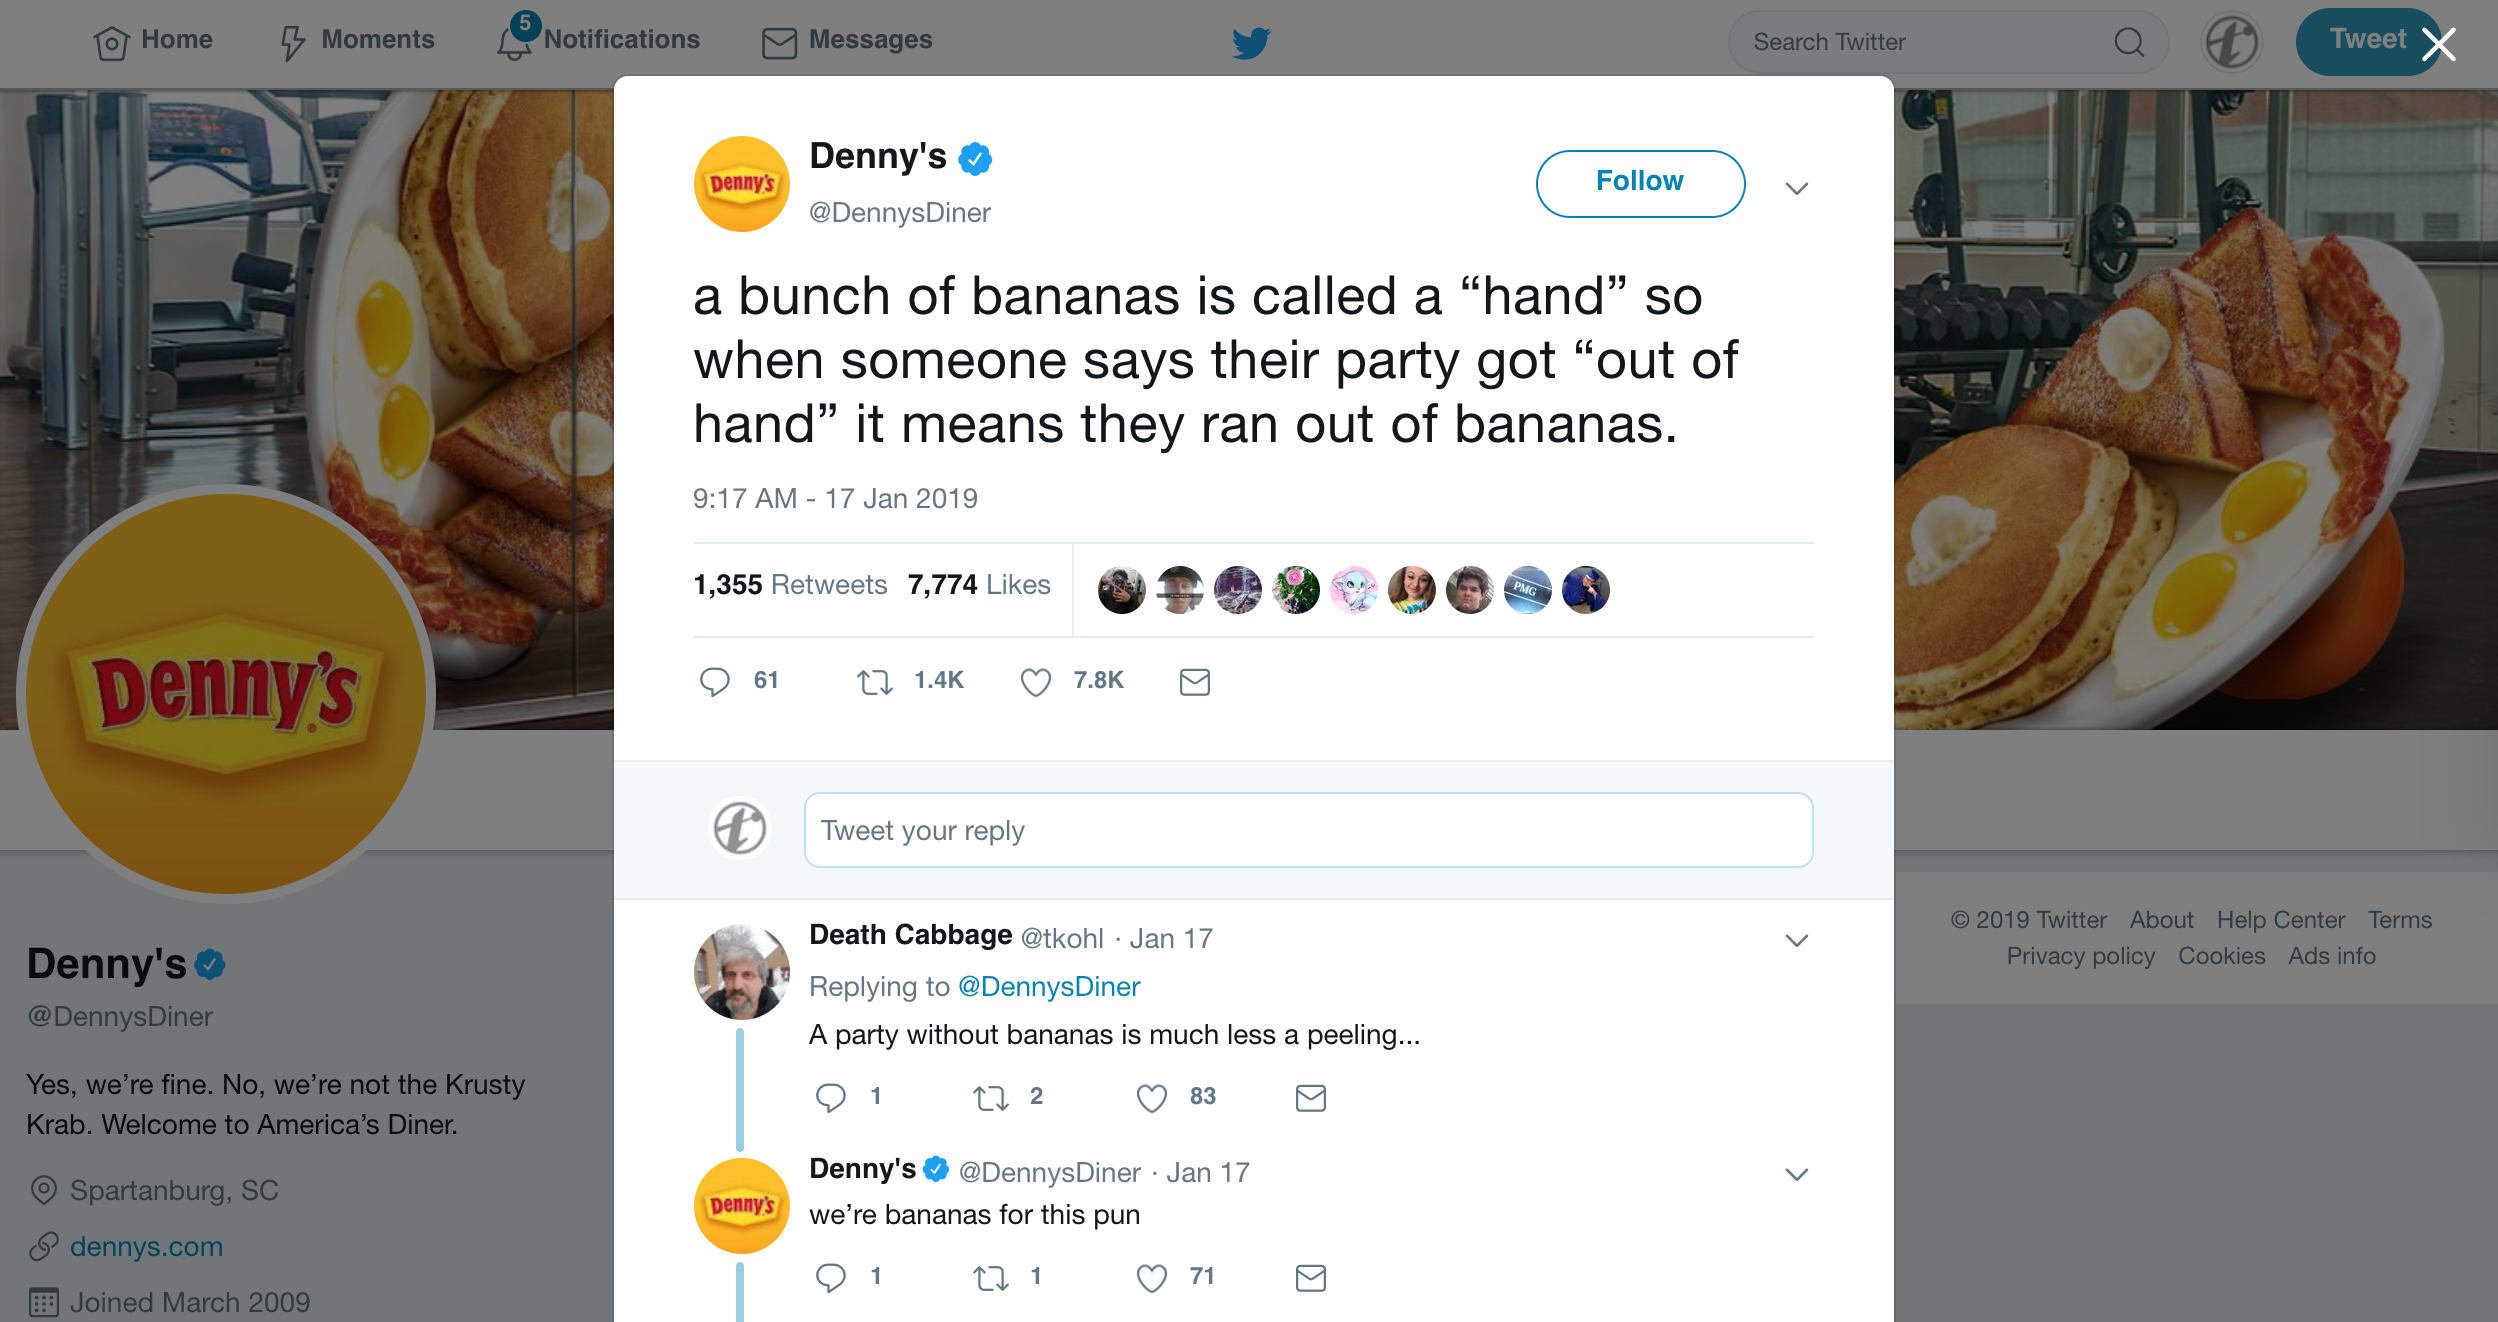 Dennys tweet